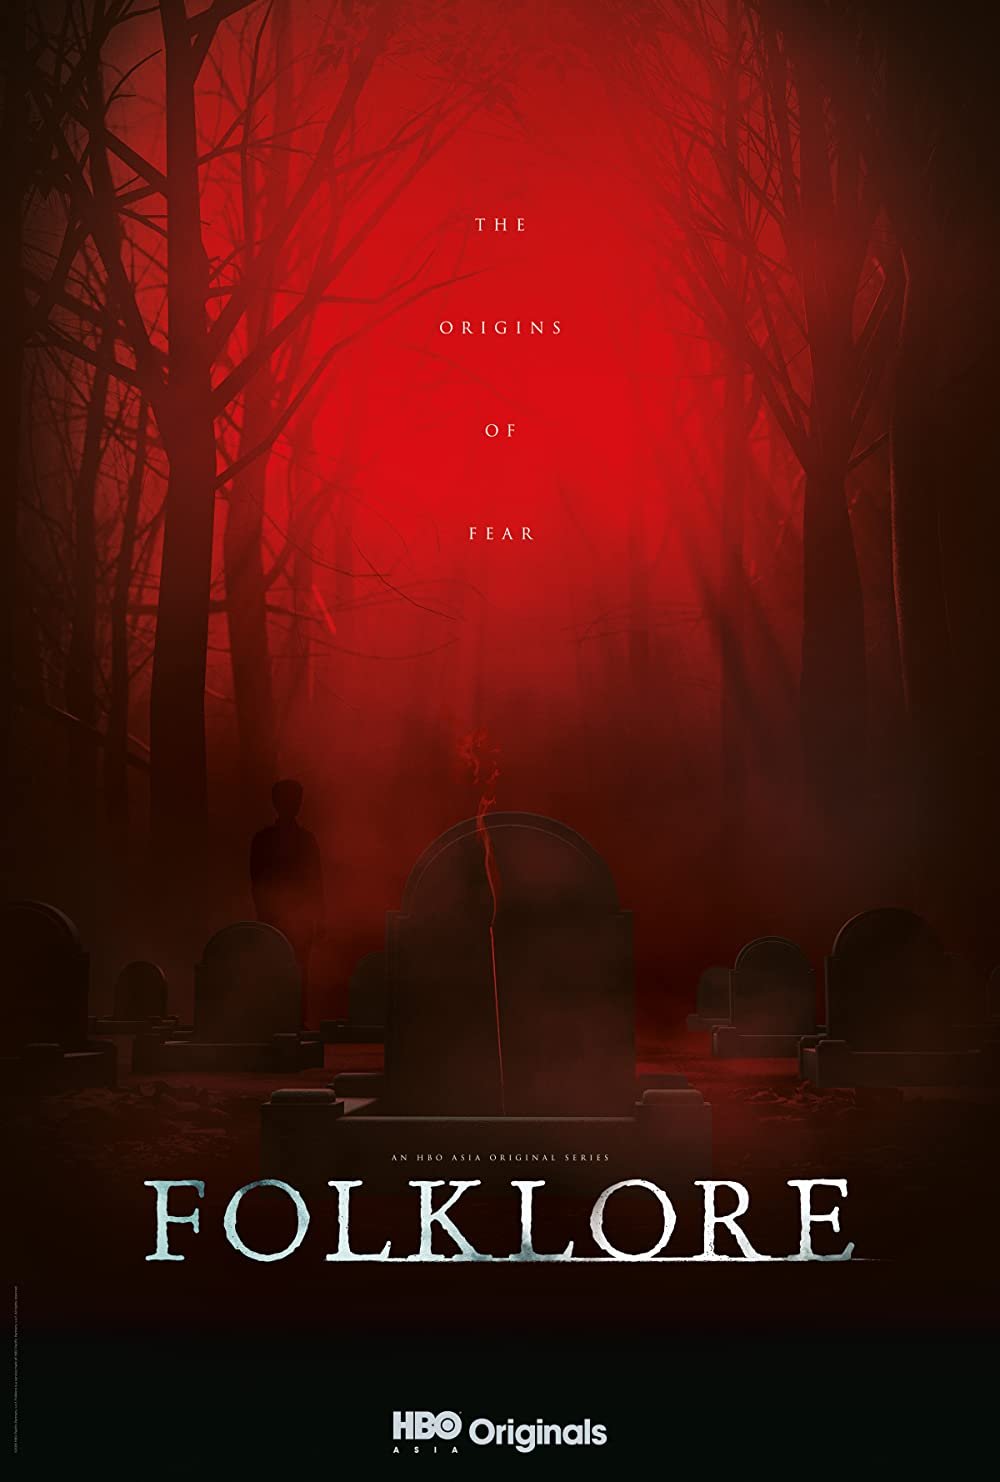 Folklore 2018 mini-series